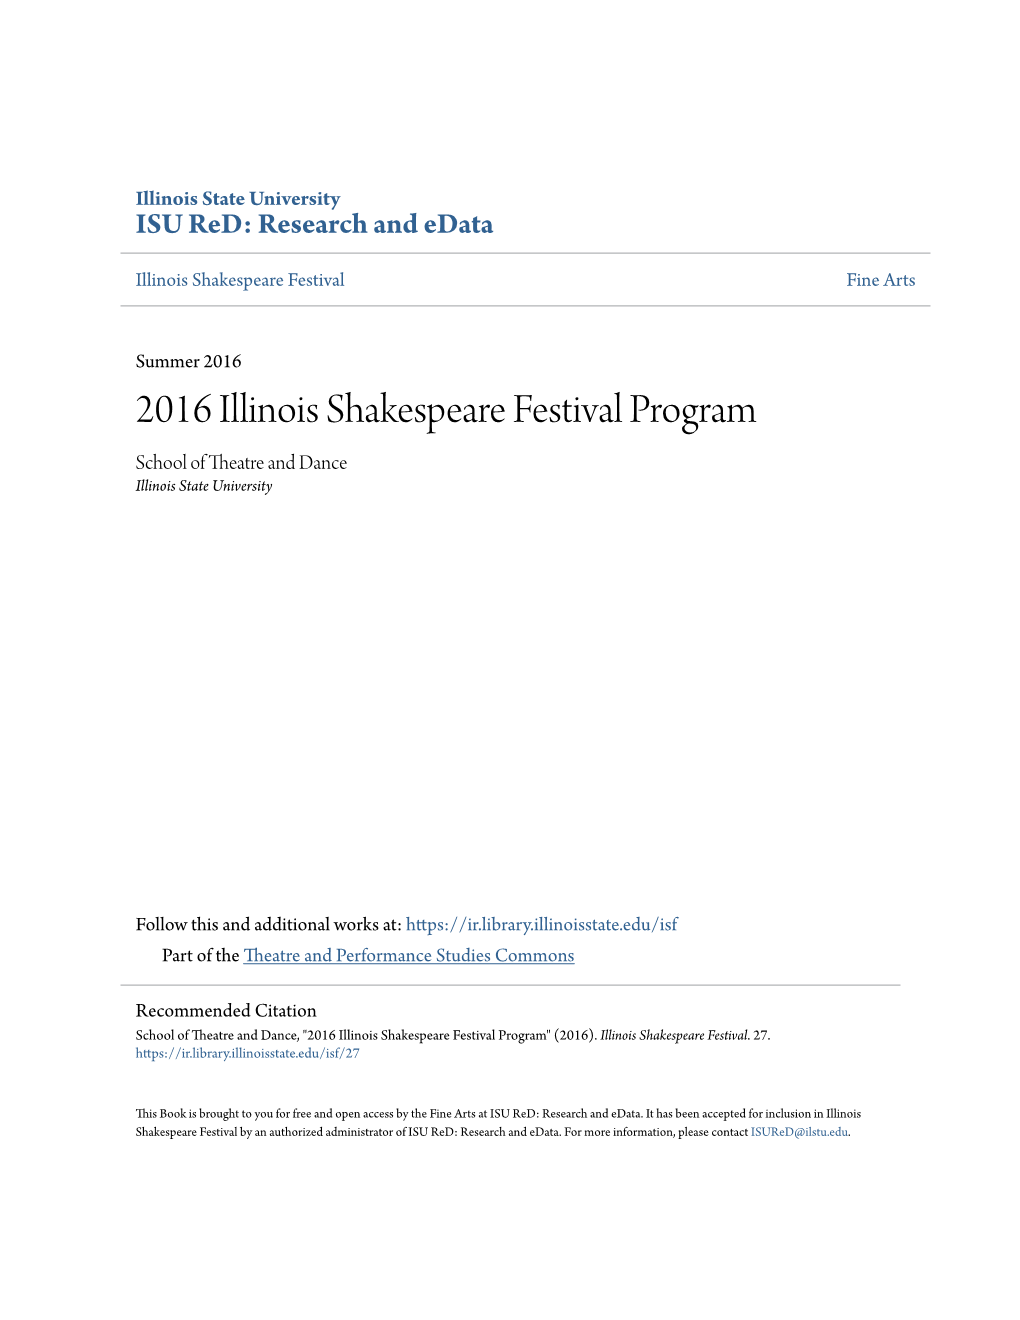 2016 Illinois Shakespeare Festival Program School of Theatre and Dance Illinois State University